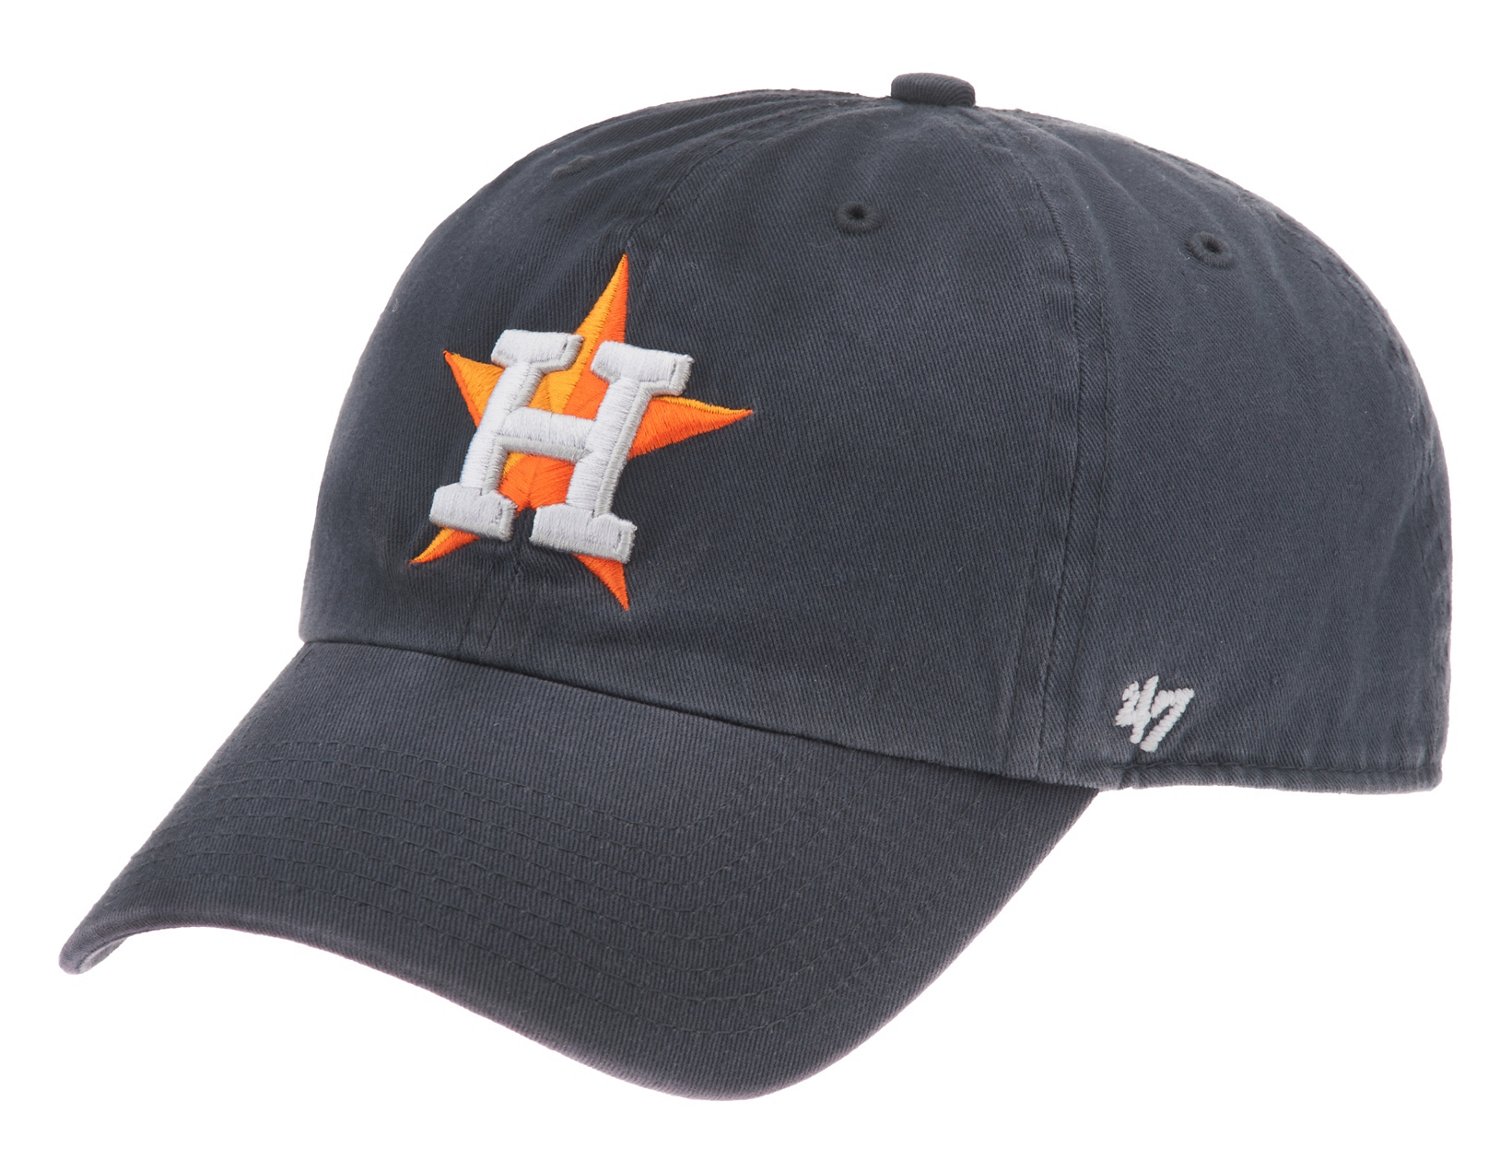 47 Houston Astros Cooperstown Evoke MVP DP Ball Cap